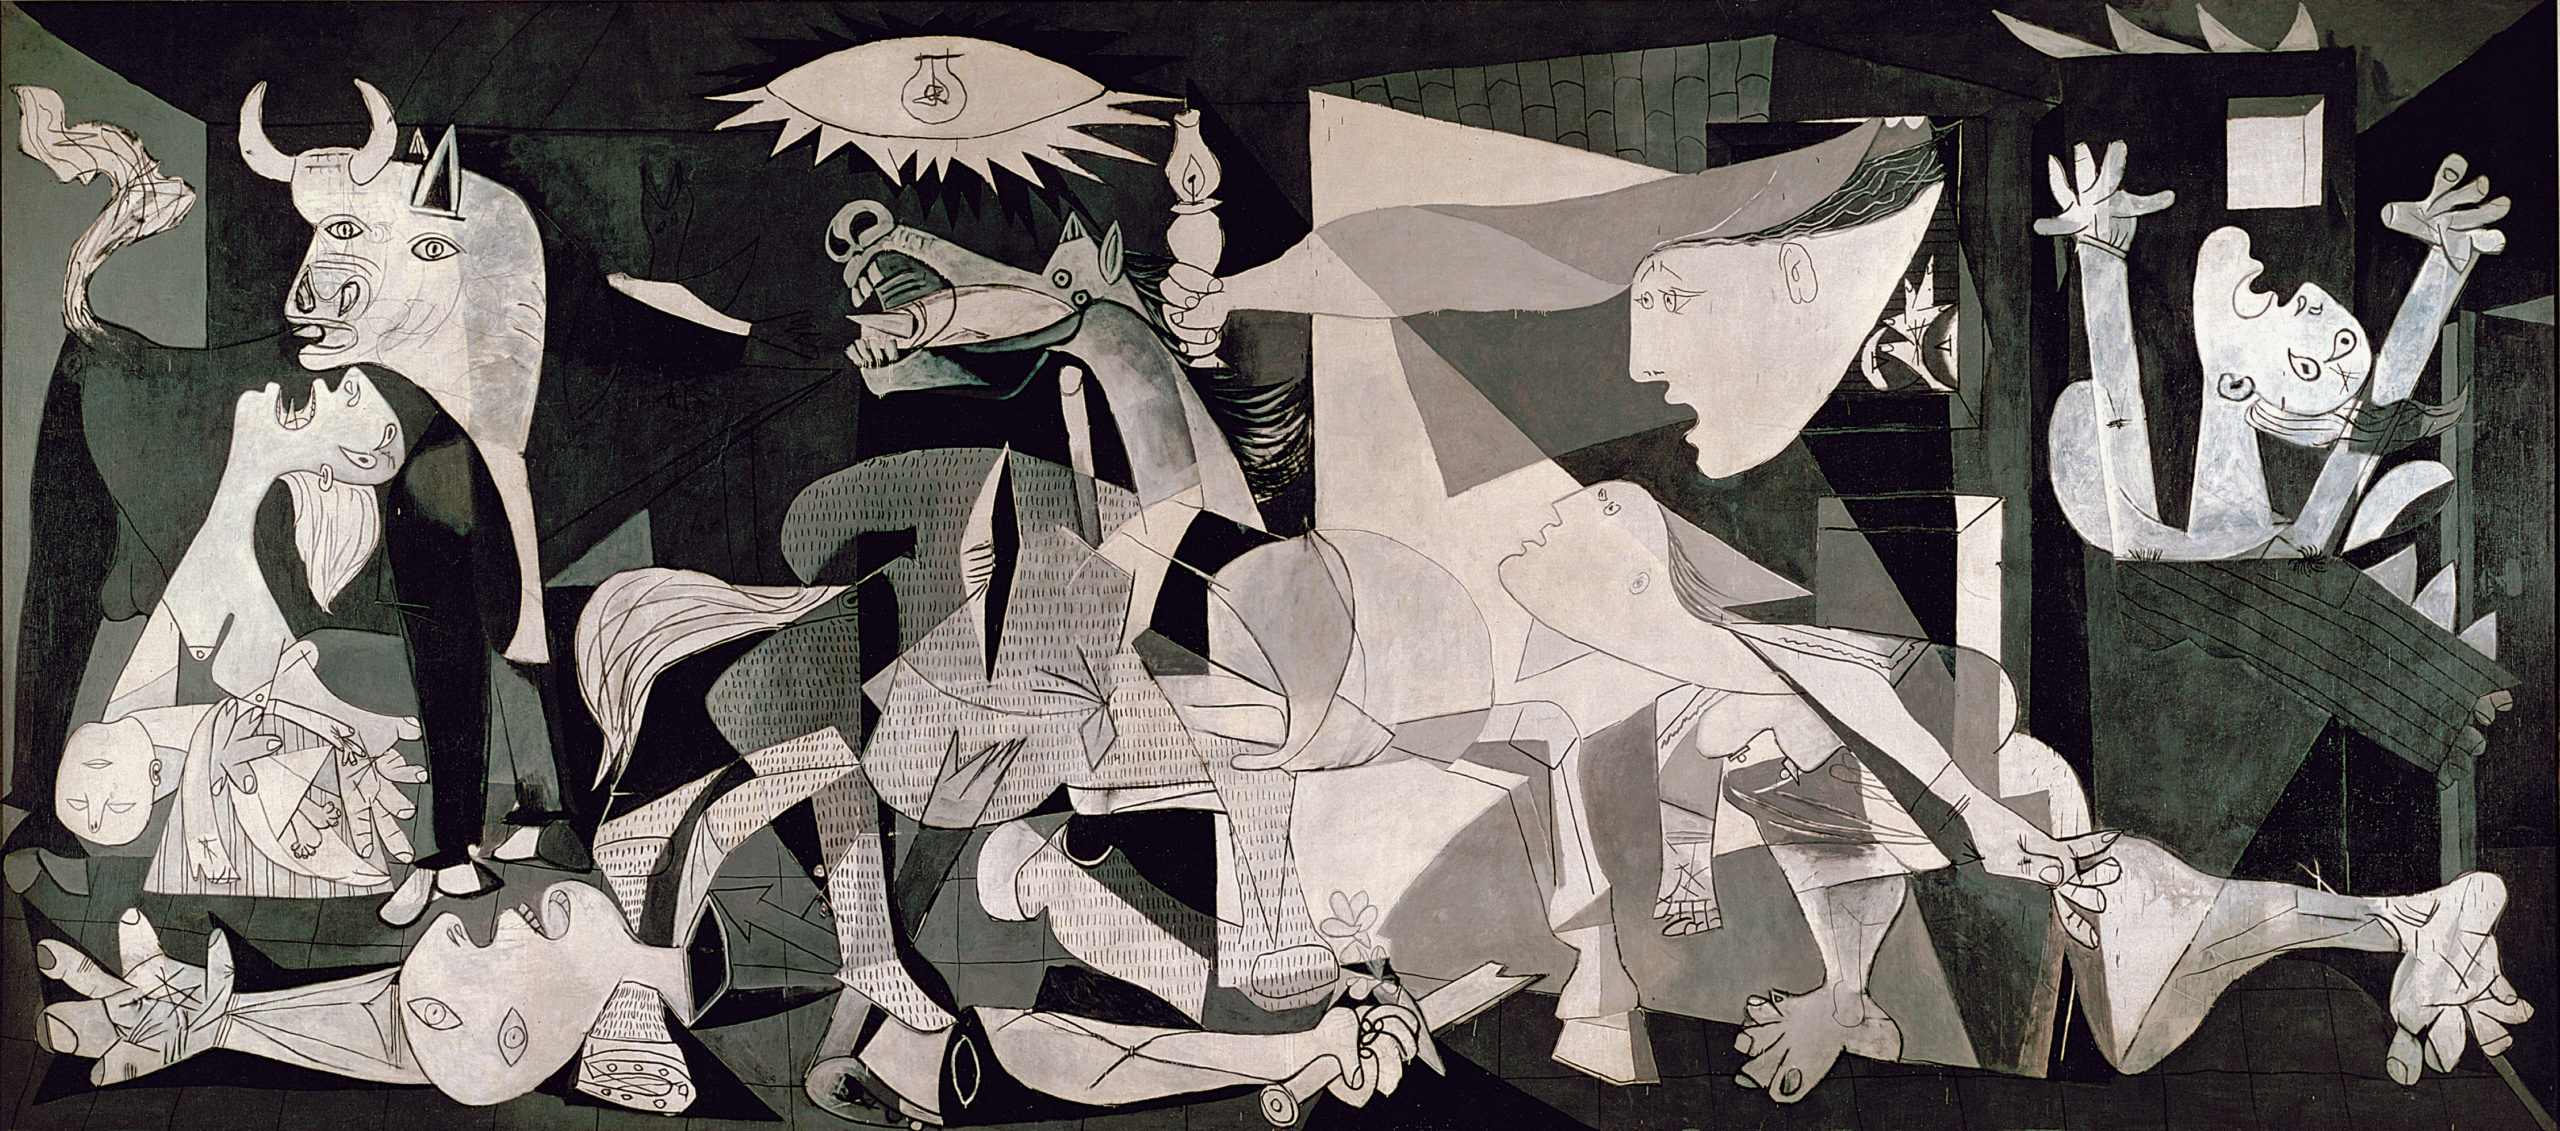 Pablo Picasso, Guernica, 1937, oil on canvas, 349 cm × 776 cm. (Museo Reina Sofia, Madrid)